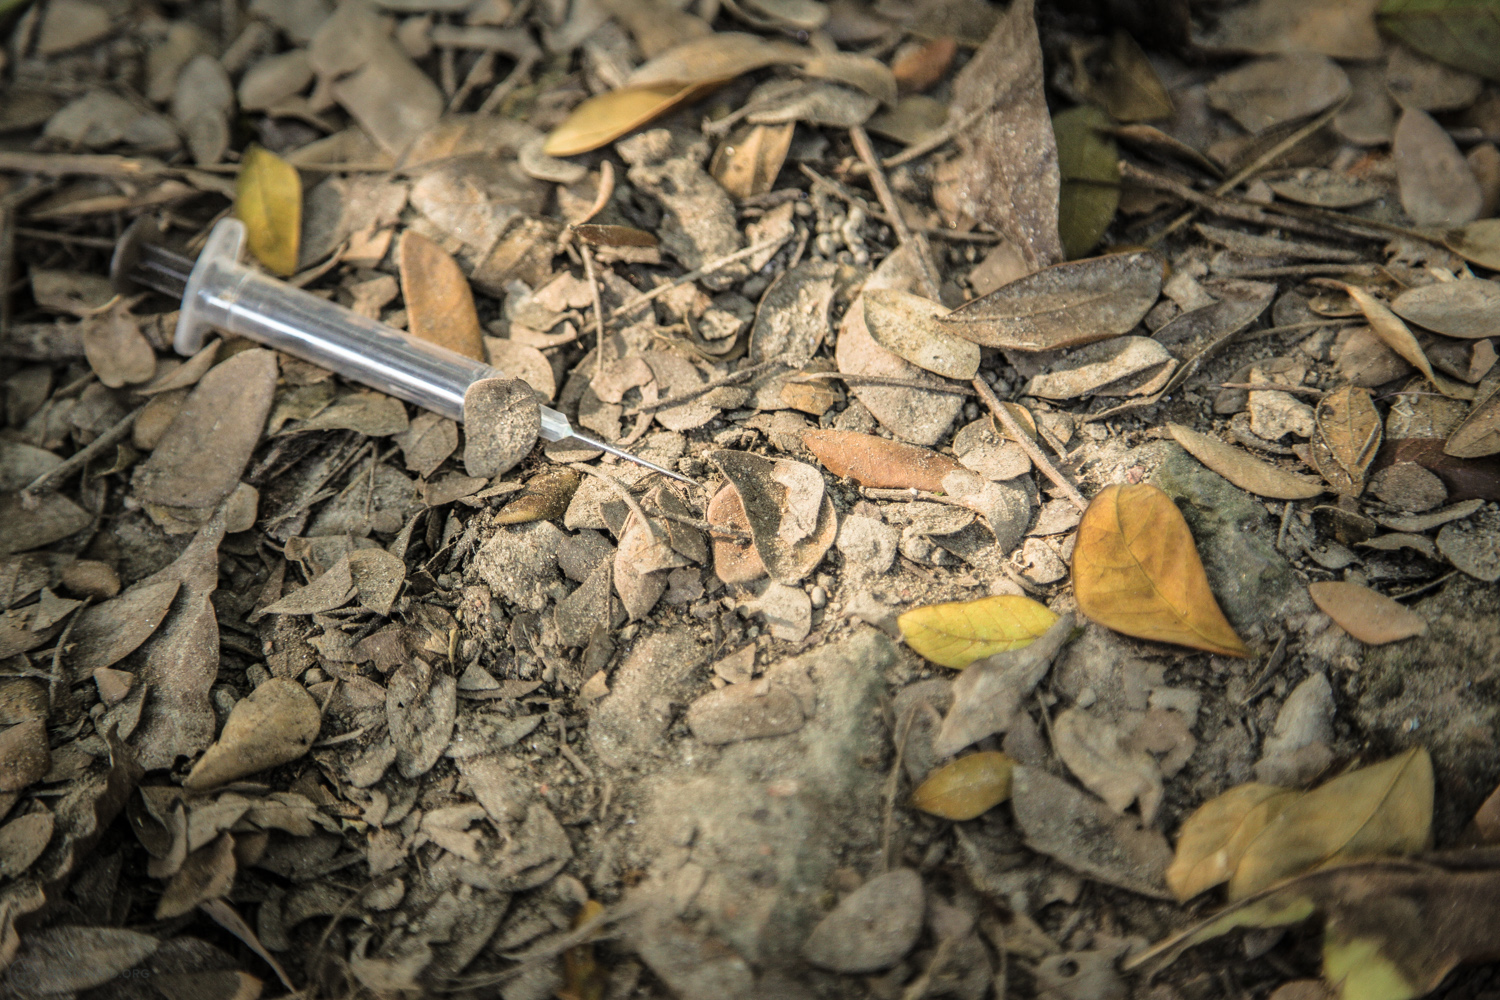  A used syringe hiding under the leaves near hospital entrance 